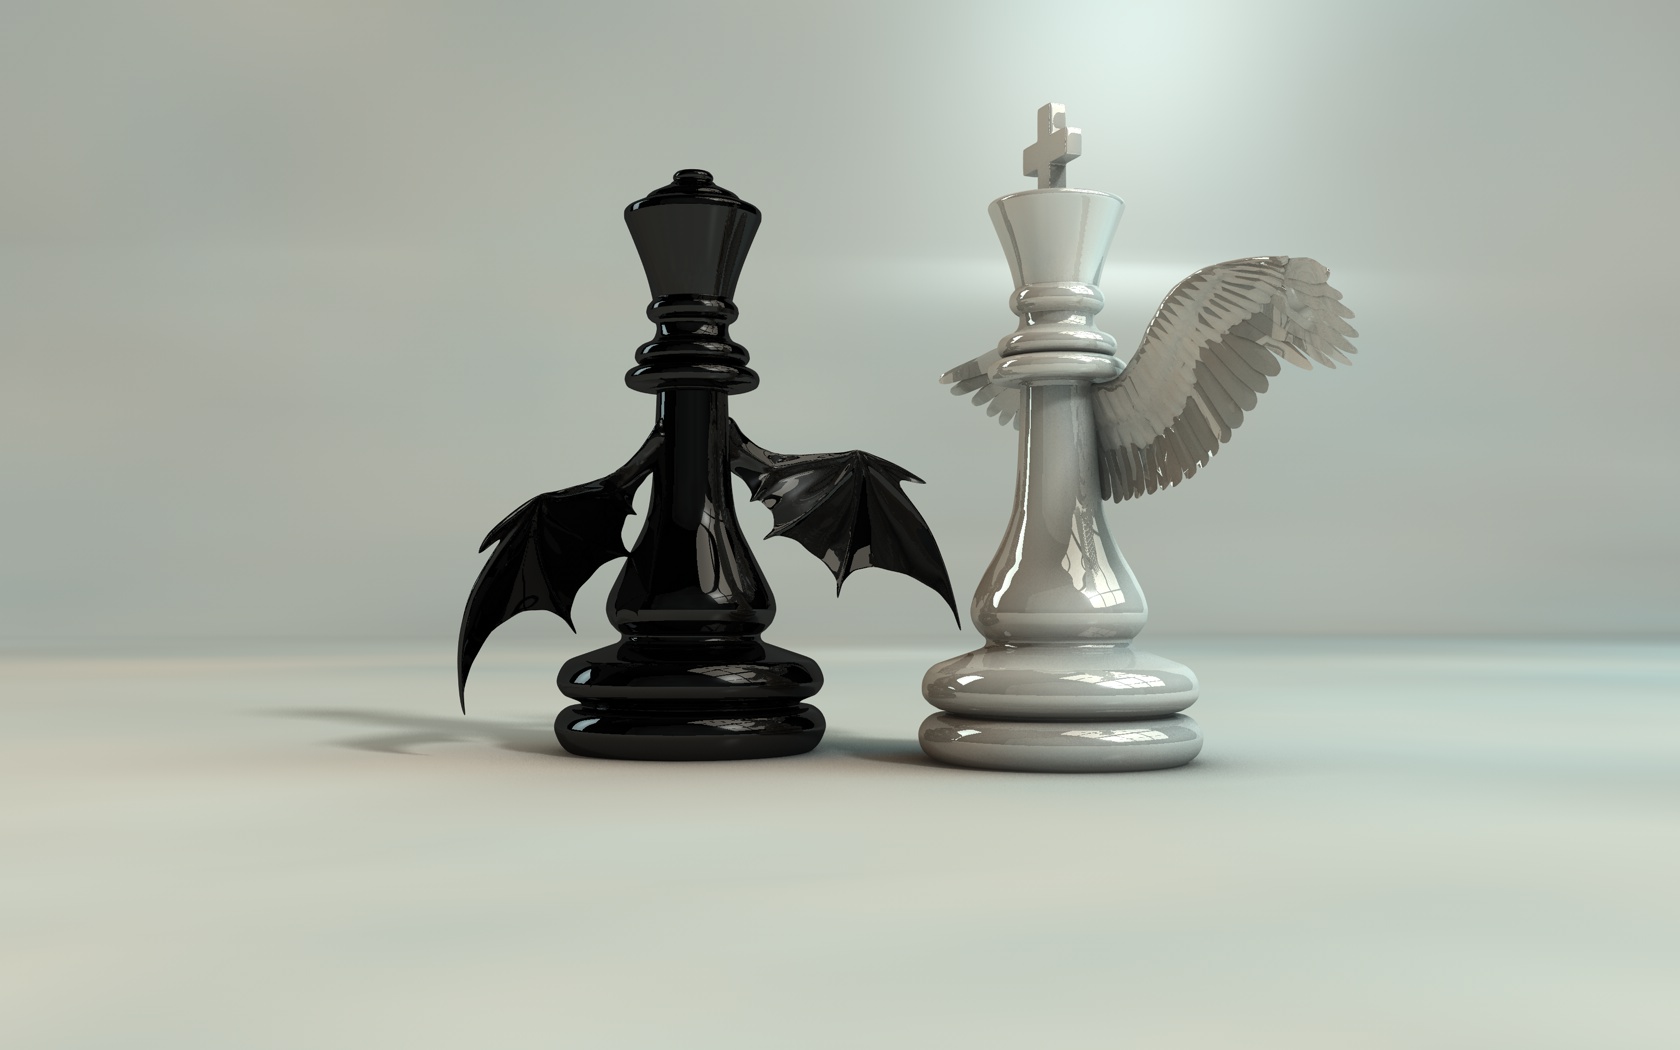 King Chess Piece Dark - HD Wallpaper 